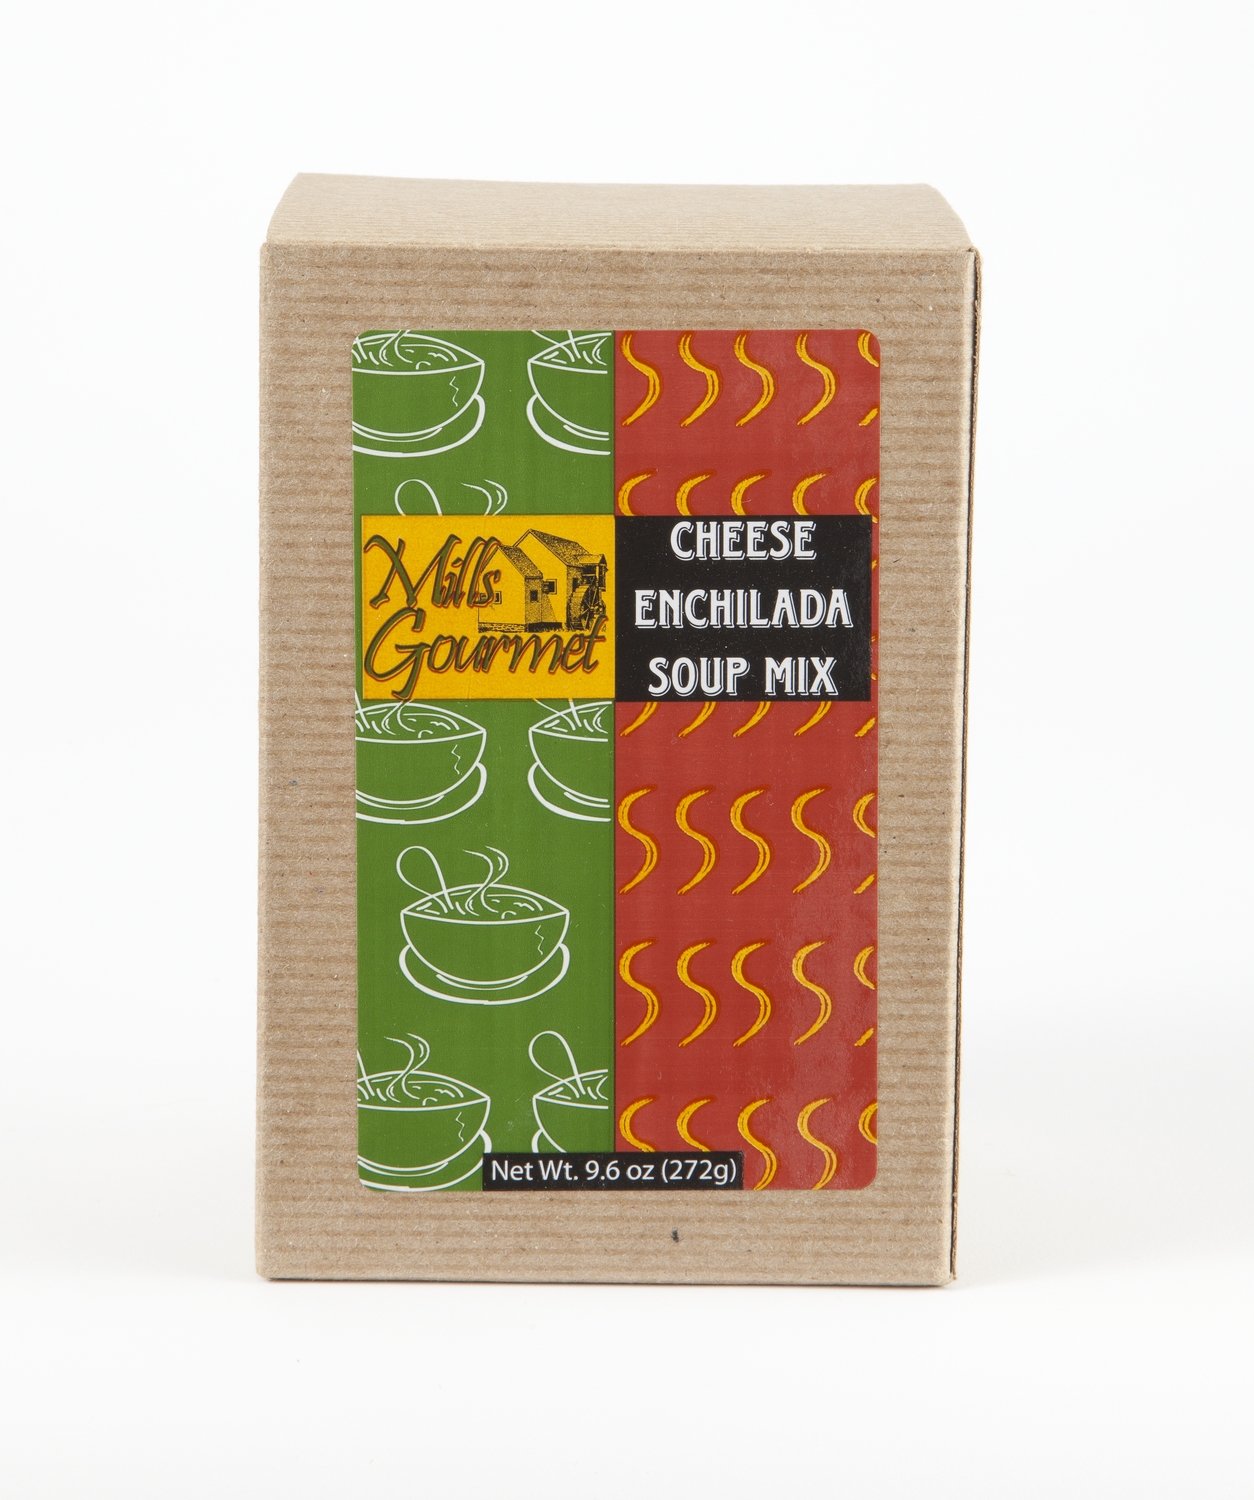 Soup Mix || Cheese Enchilada Soup